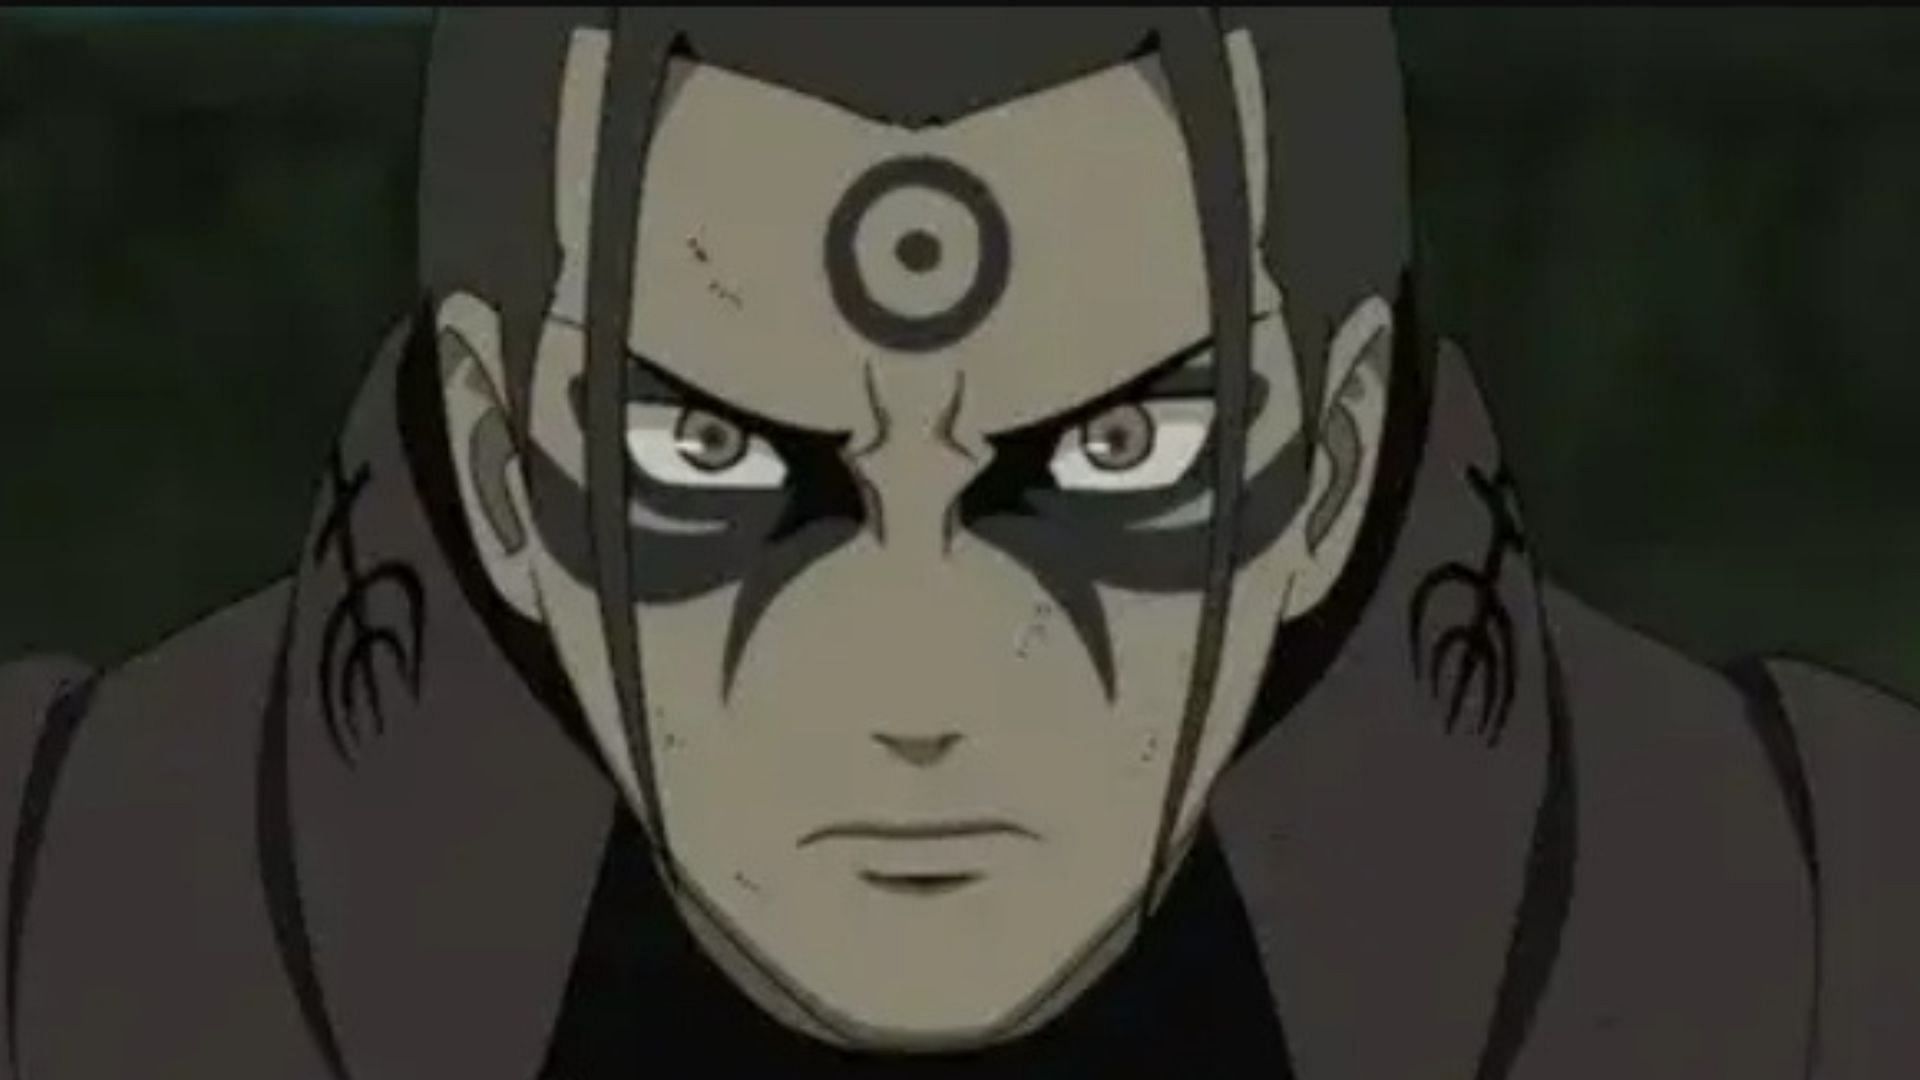 Hahirama as seen in the anime Naruto (Image via Studio Pierrot)